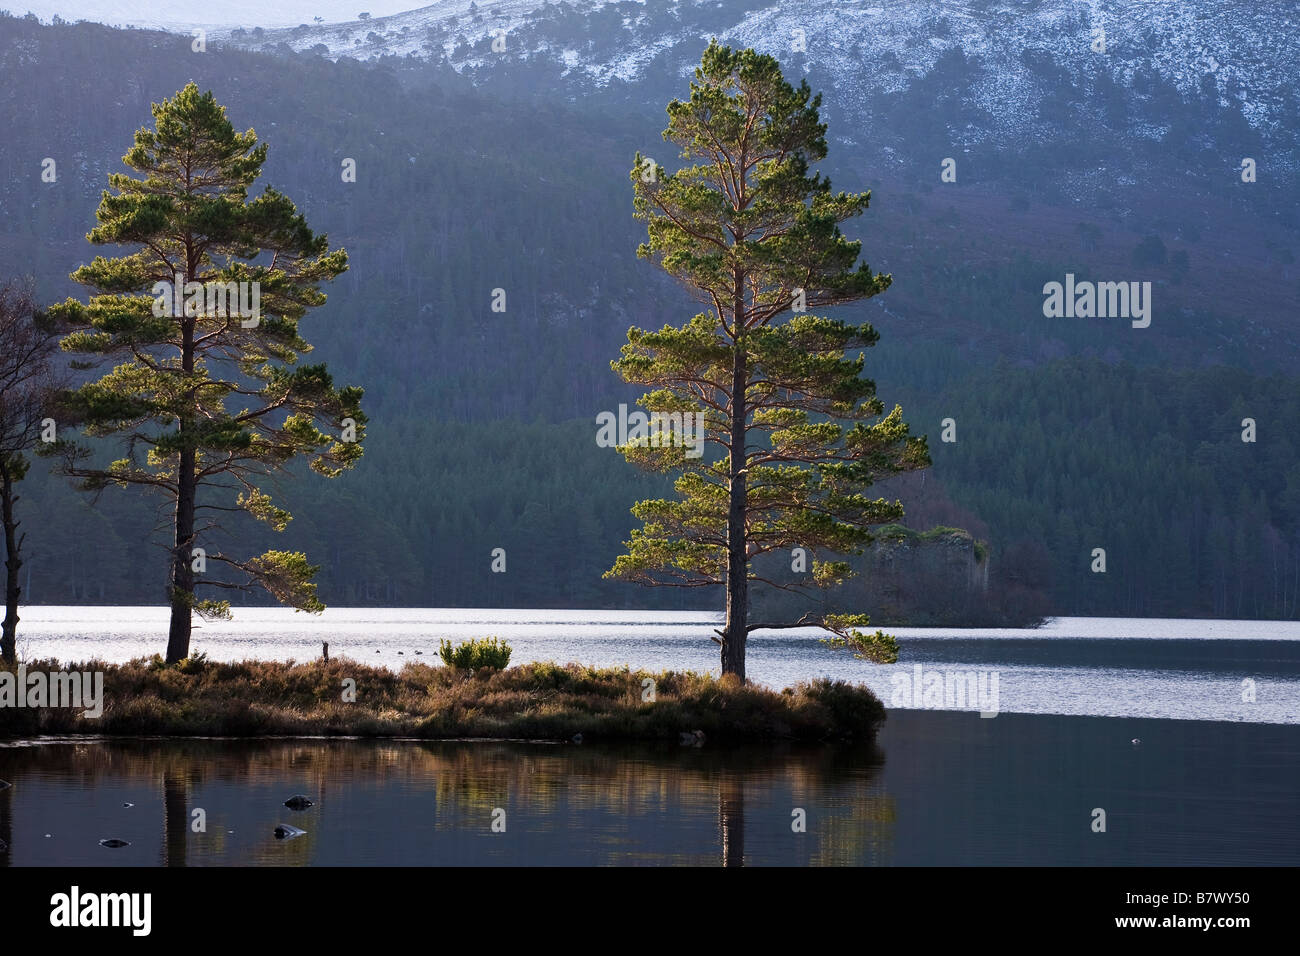 Two Pine Trees, Loch an Eilein, Rothiemurchus, Scotland Stock Photo